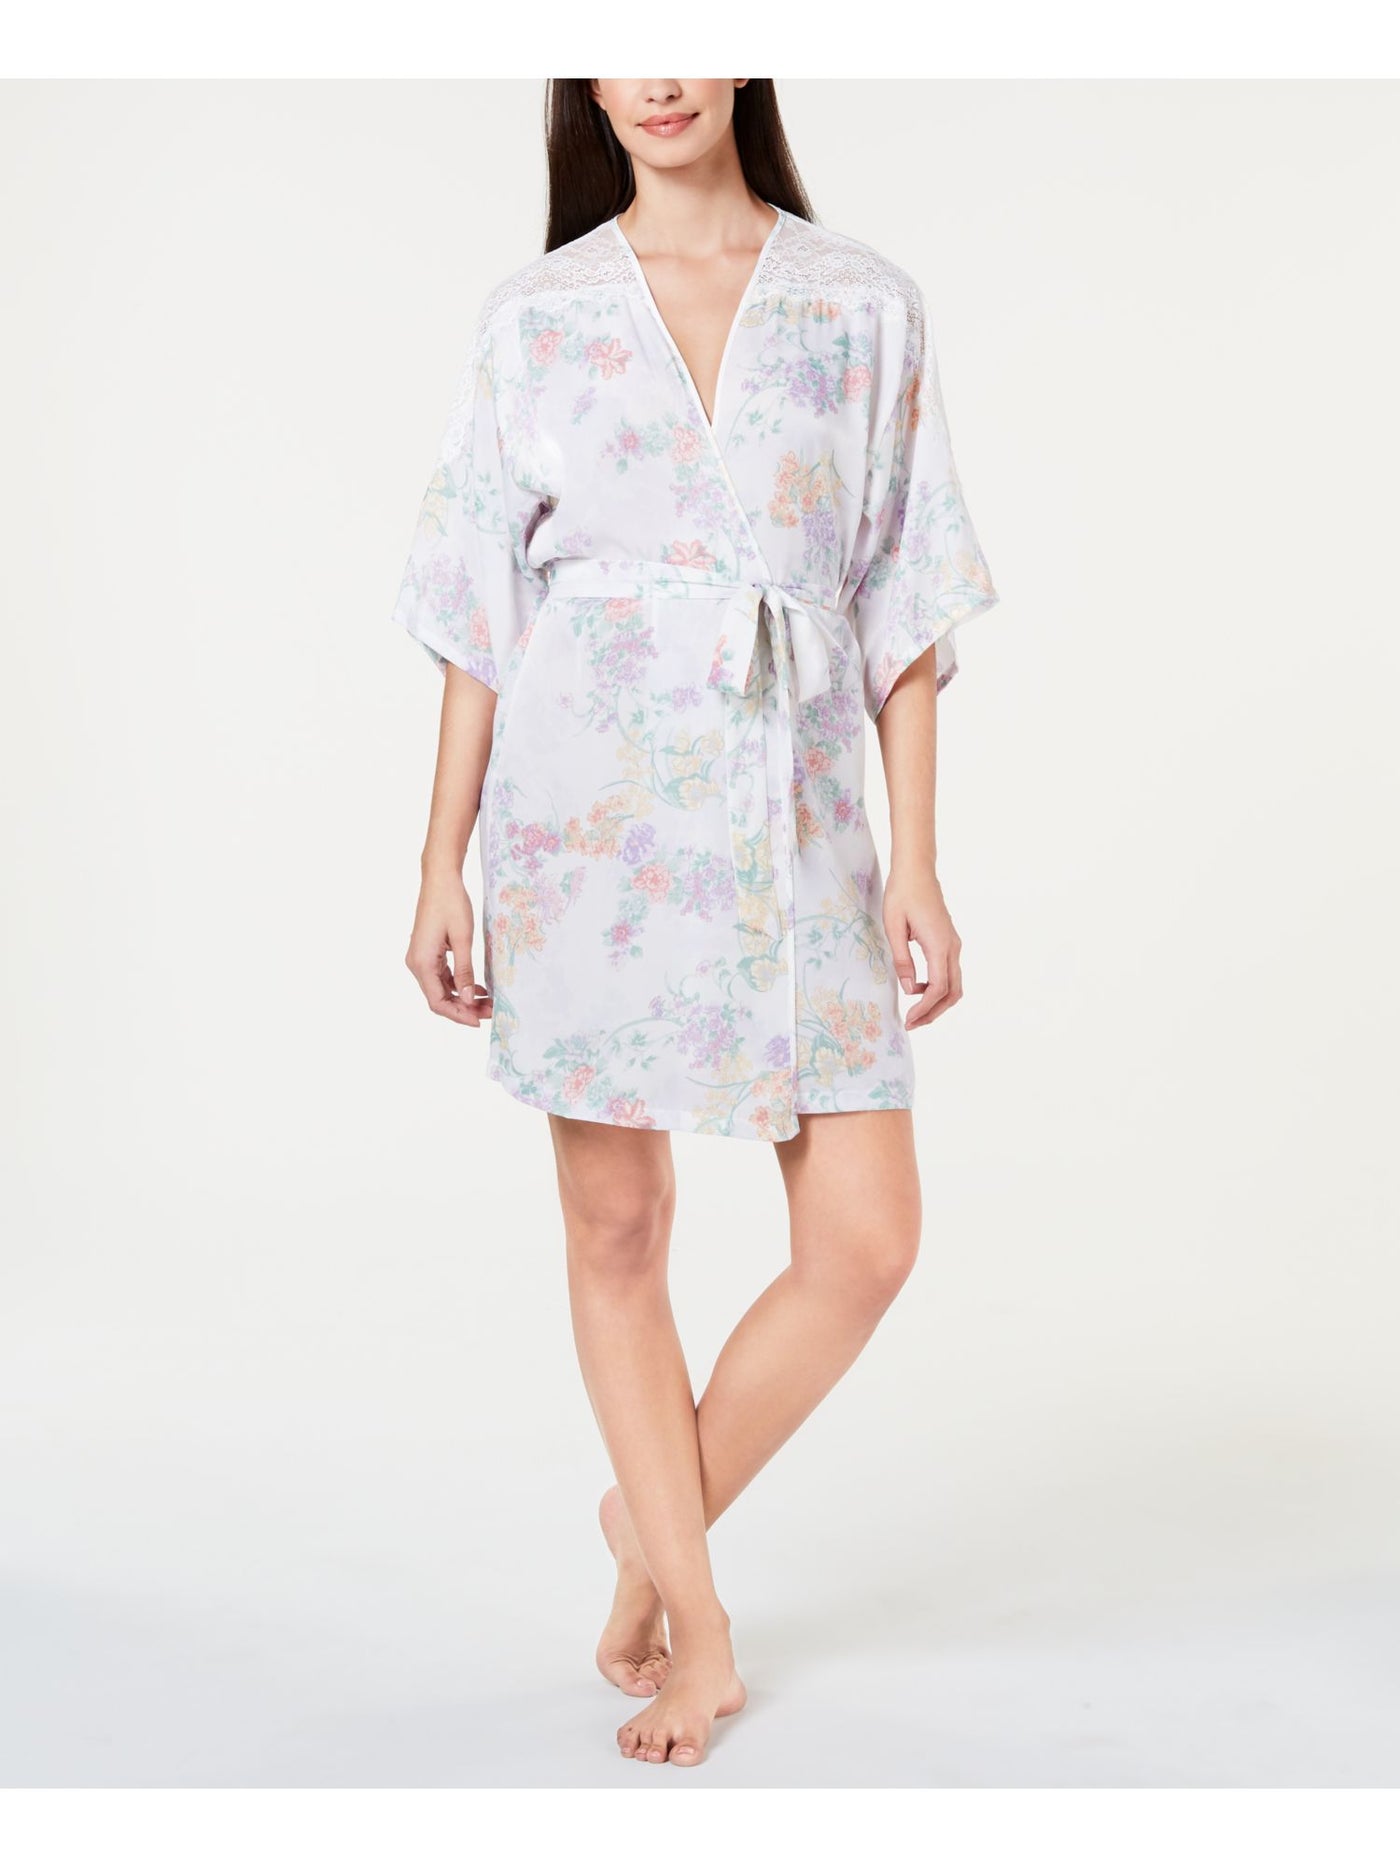 LINEA DONATELLA Intimates White Lace Trim Floral Sleepwear Robe Size: S